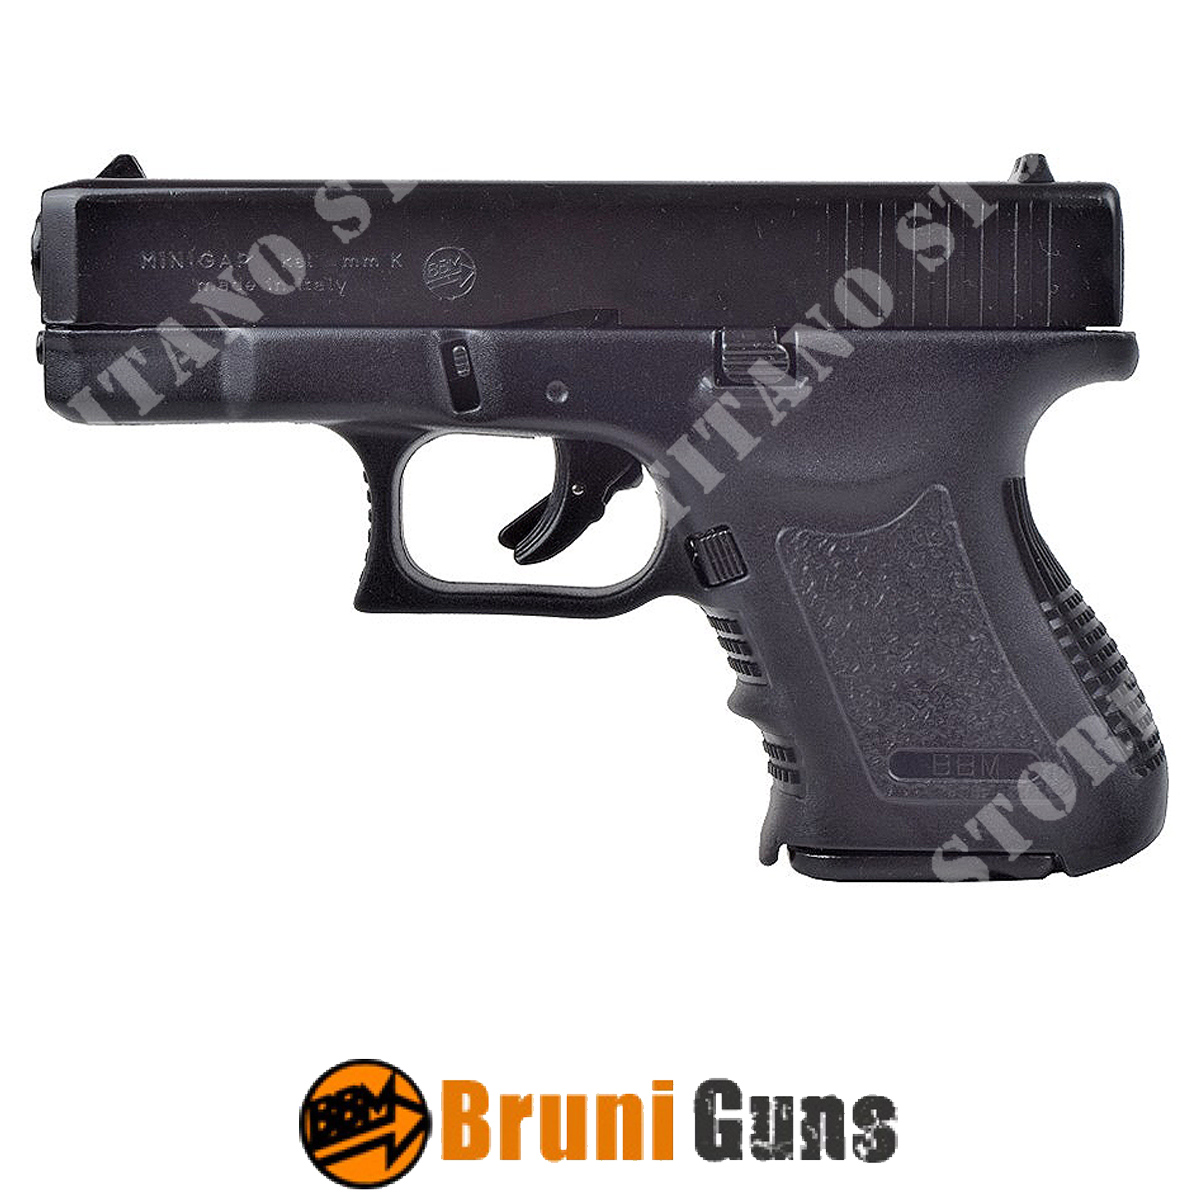 BRUNI GUNS blank gun GAP caliber 9 mm black / tan (BR-1401BT)